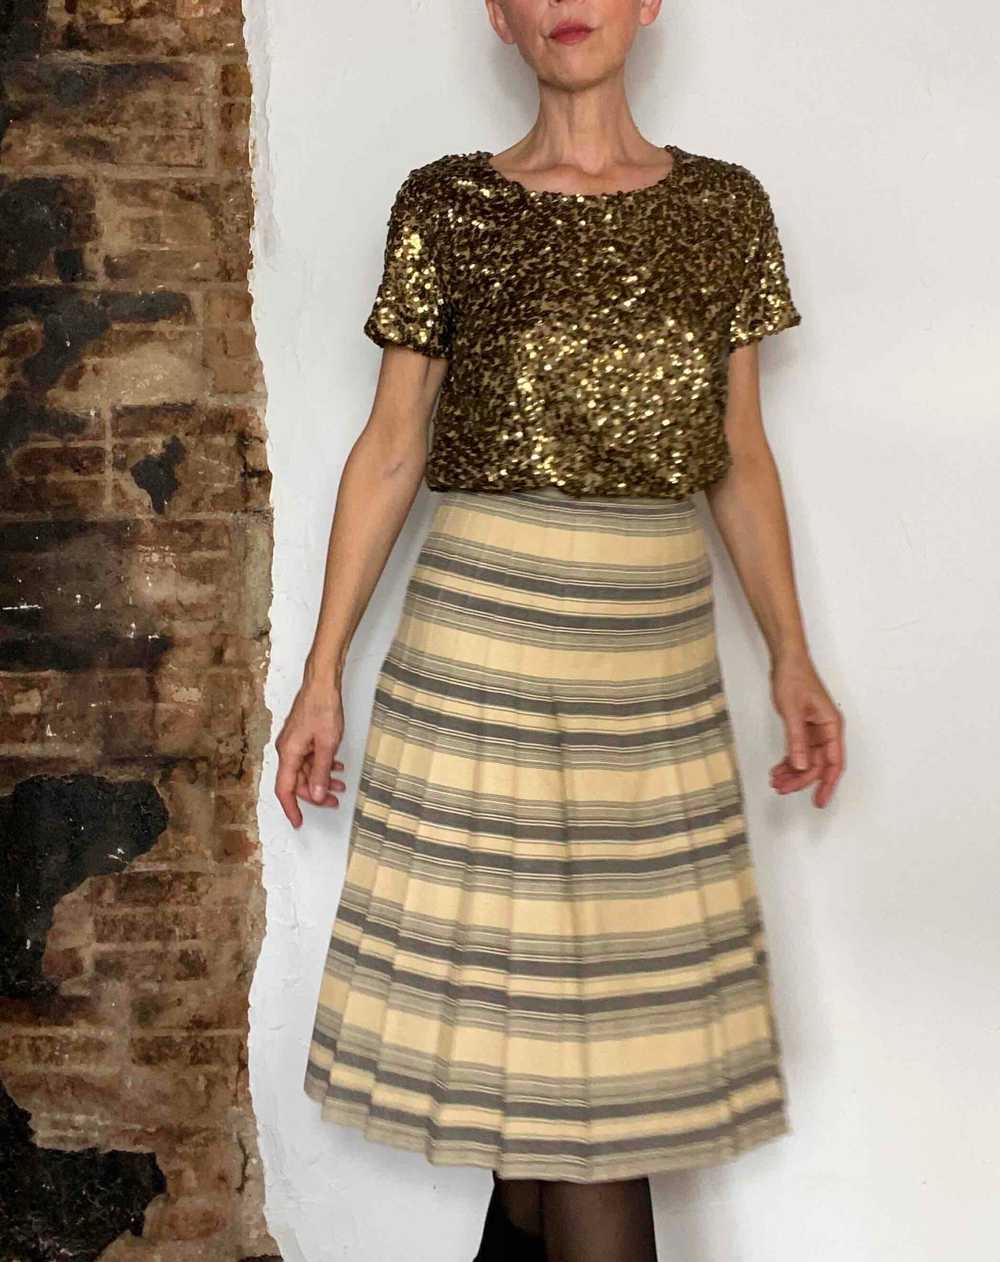 Wool skirt - Scottish plaid skirt from the 70s-80s - image 3